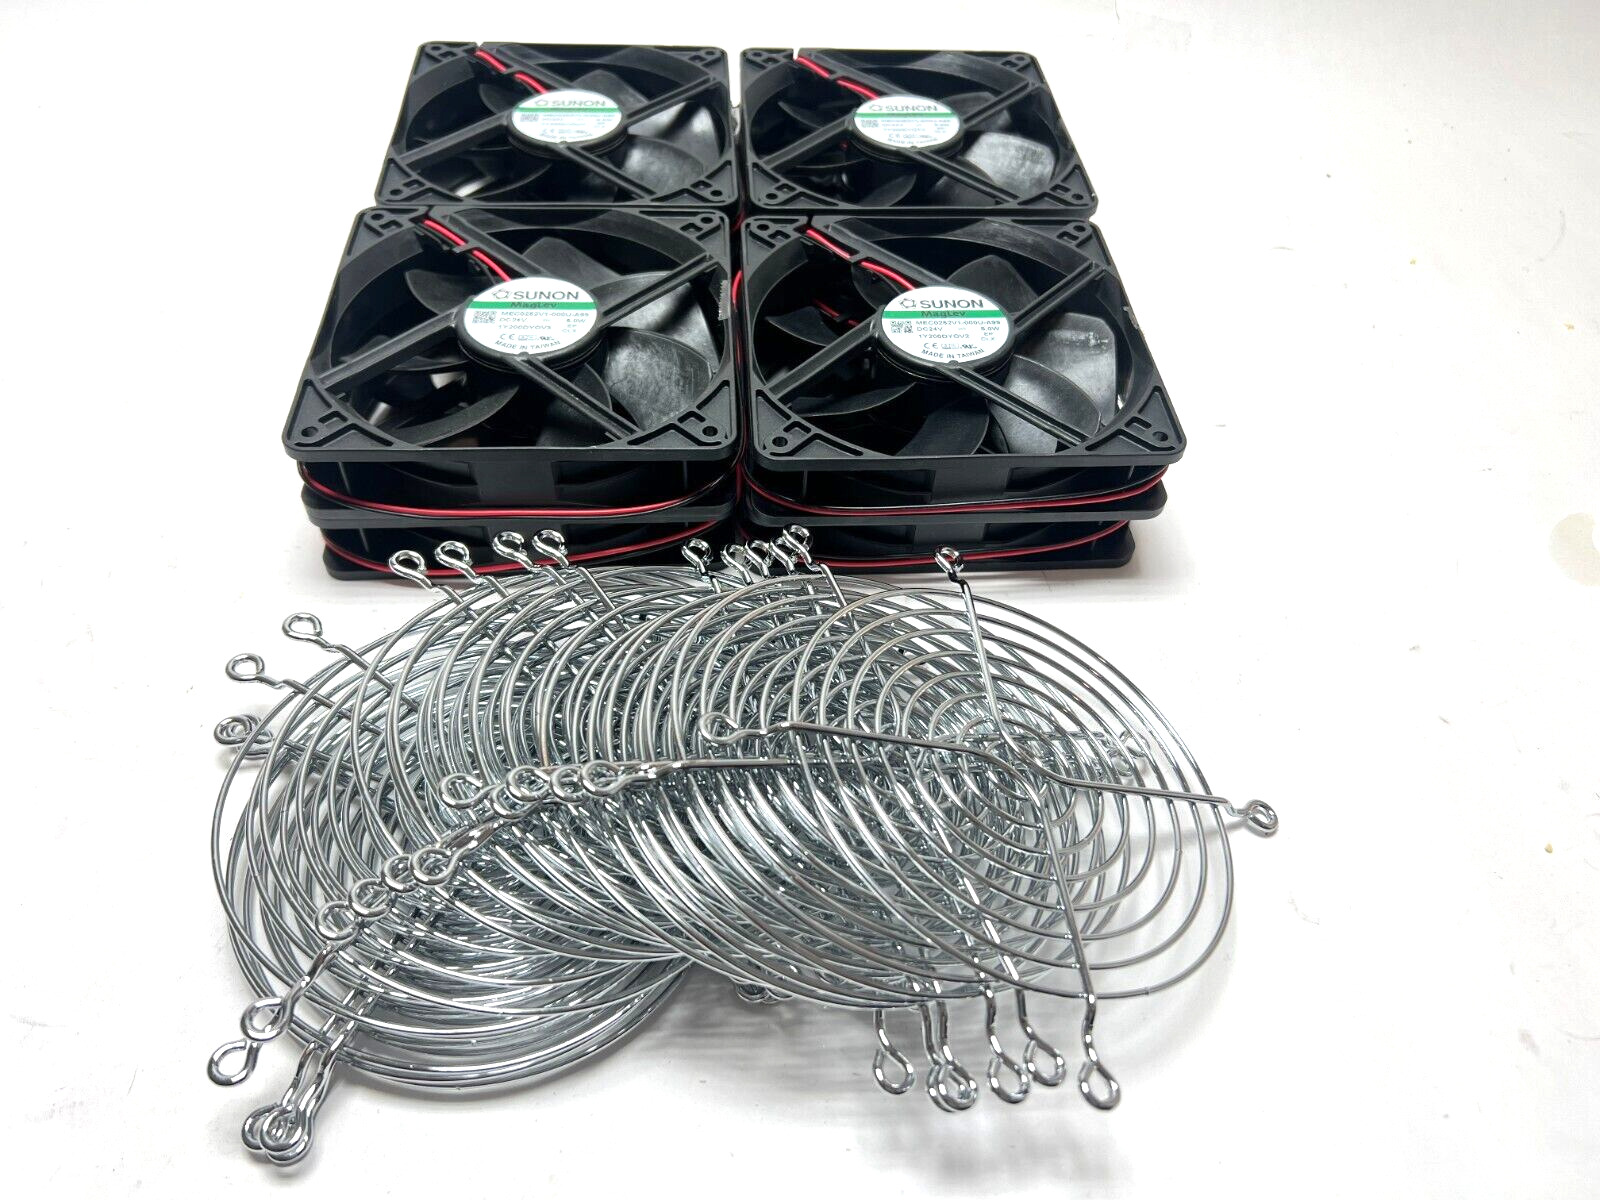 Lot of 8x SUNON MEC0252V1-000U-A99 12025 24V 5.0W 12CM Cooling Fan 2-wire Guard